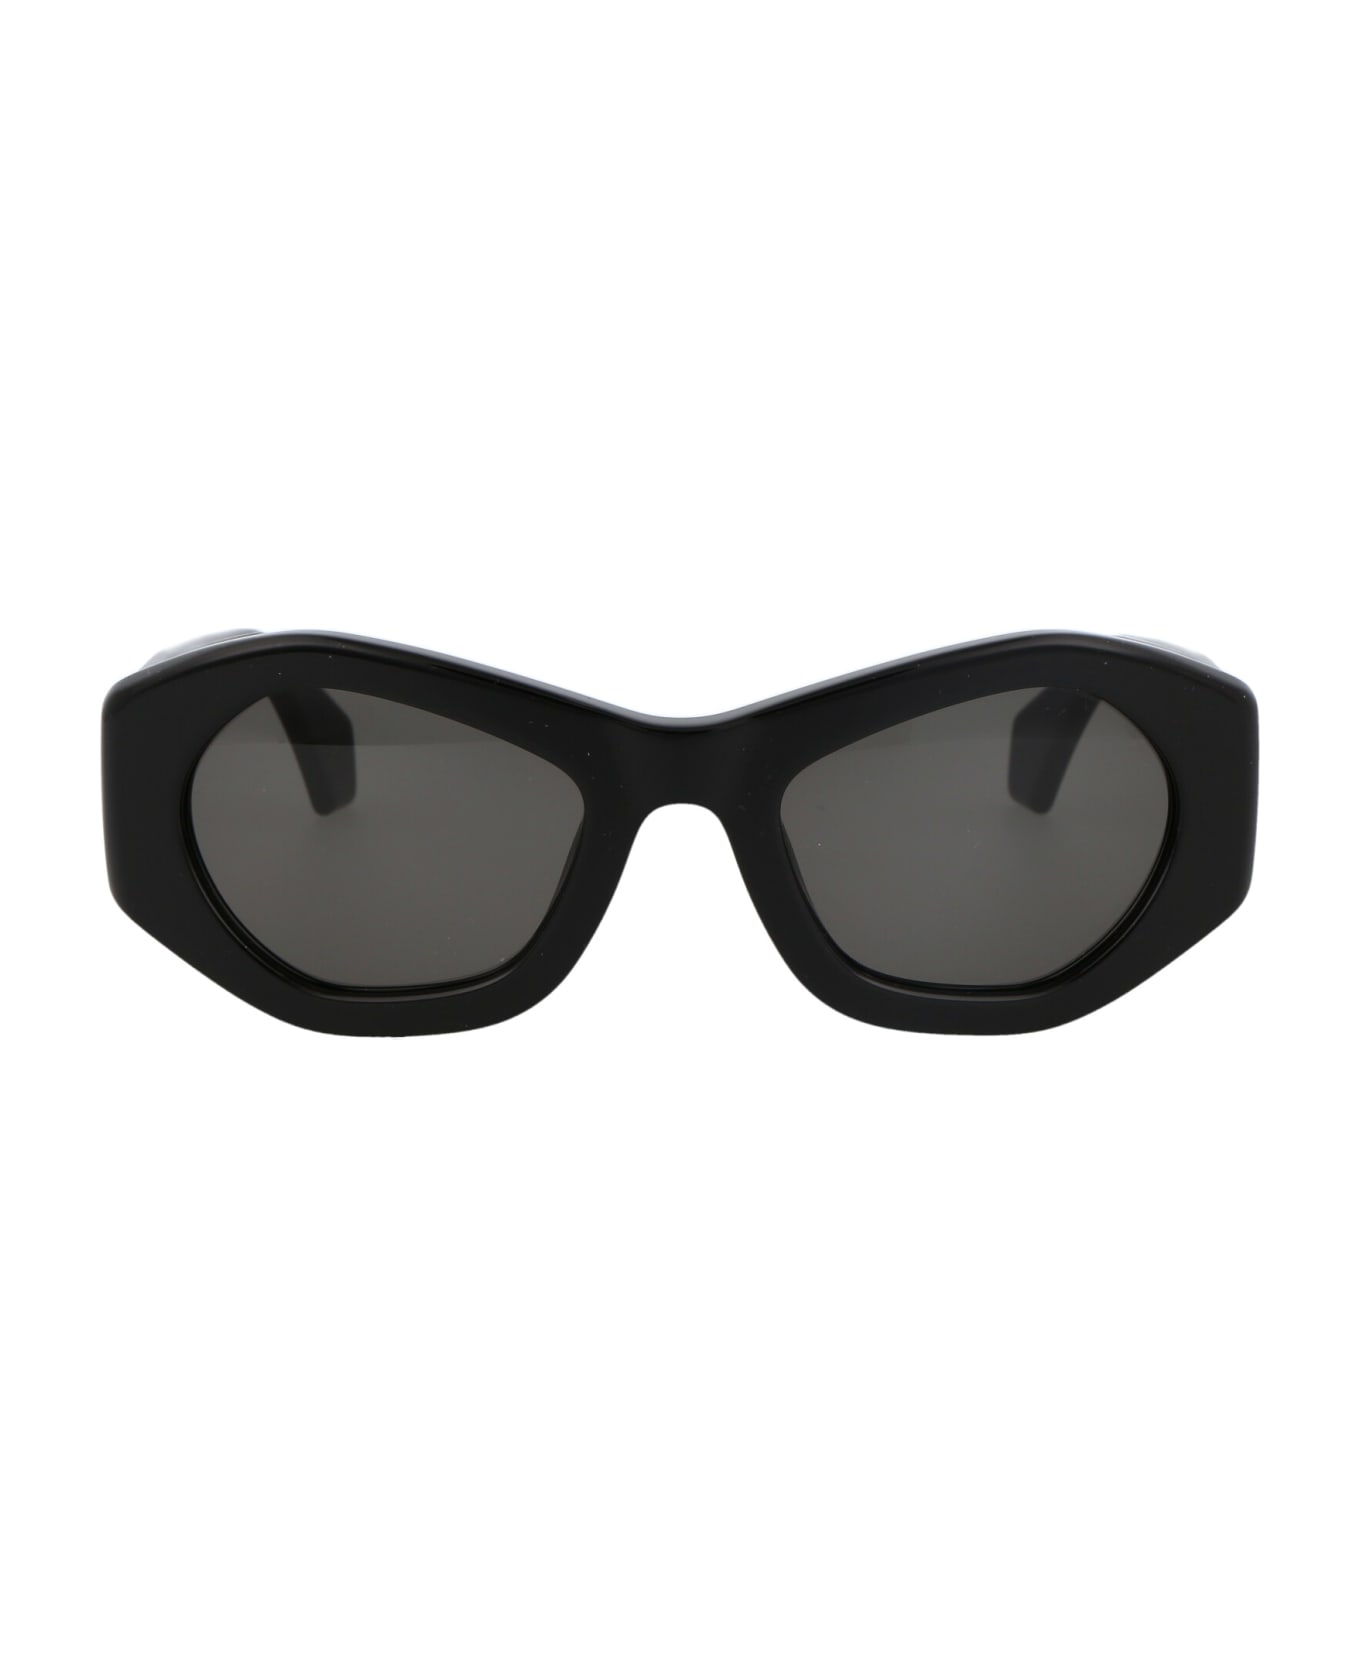 AMBUSH Pryzma Sunglasses - 1007 were craving stripes on everything from sunglasses to snakeskin handbags